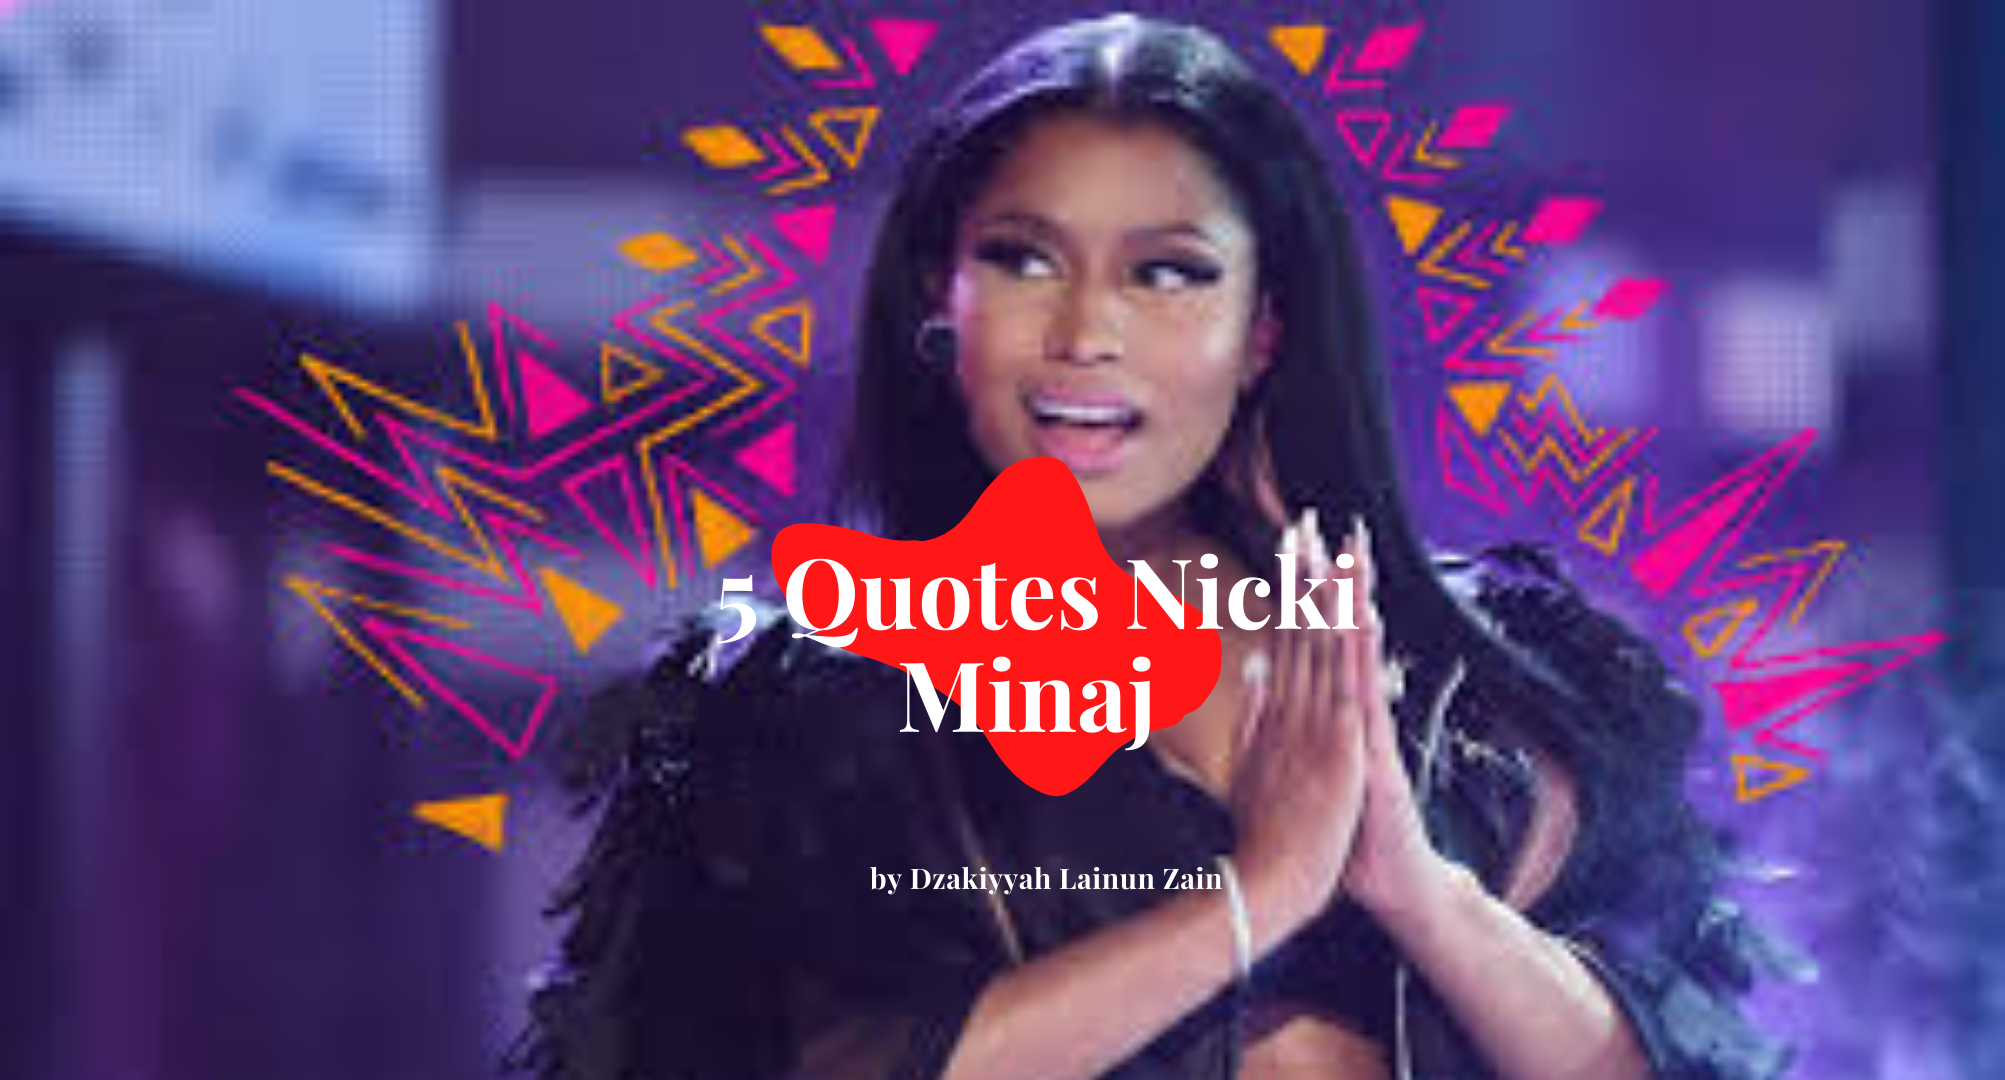 5 Quotes Nicki Minaj